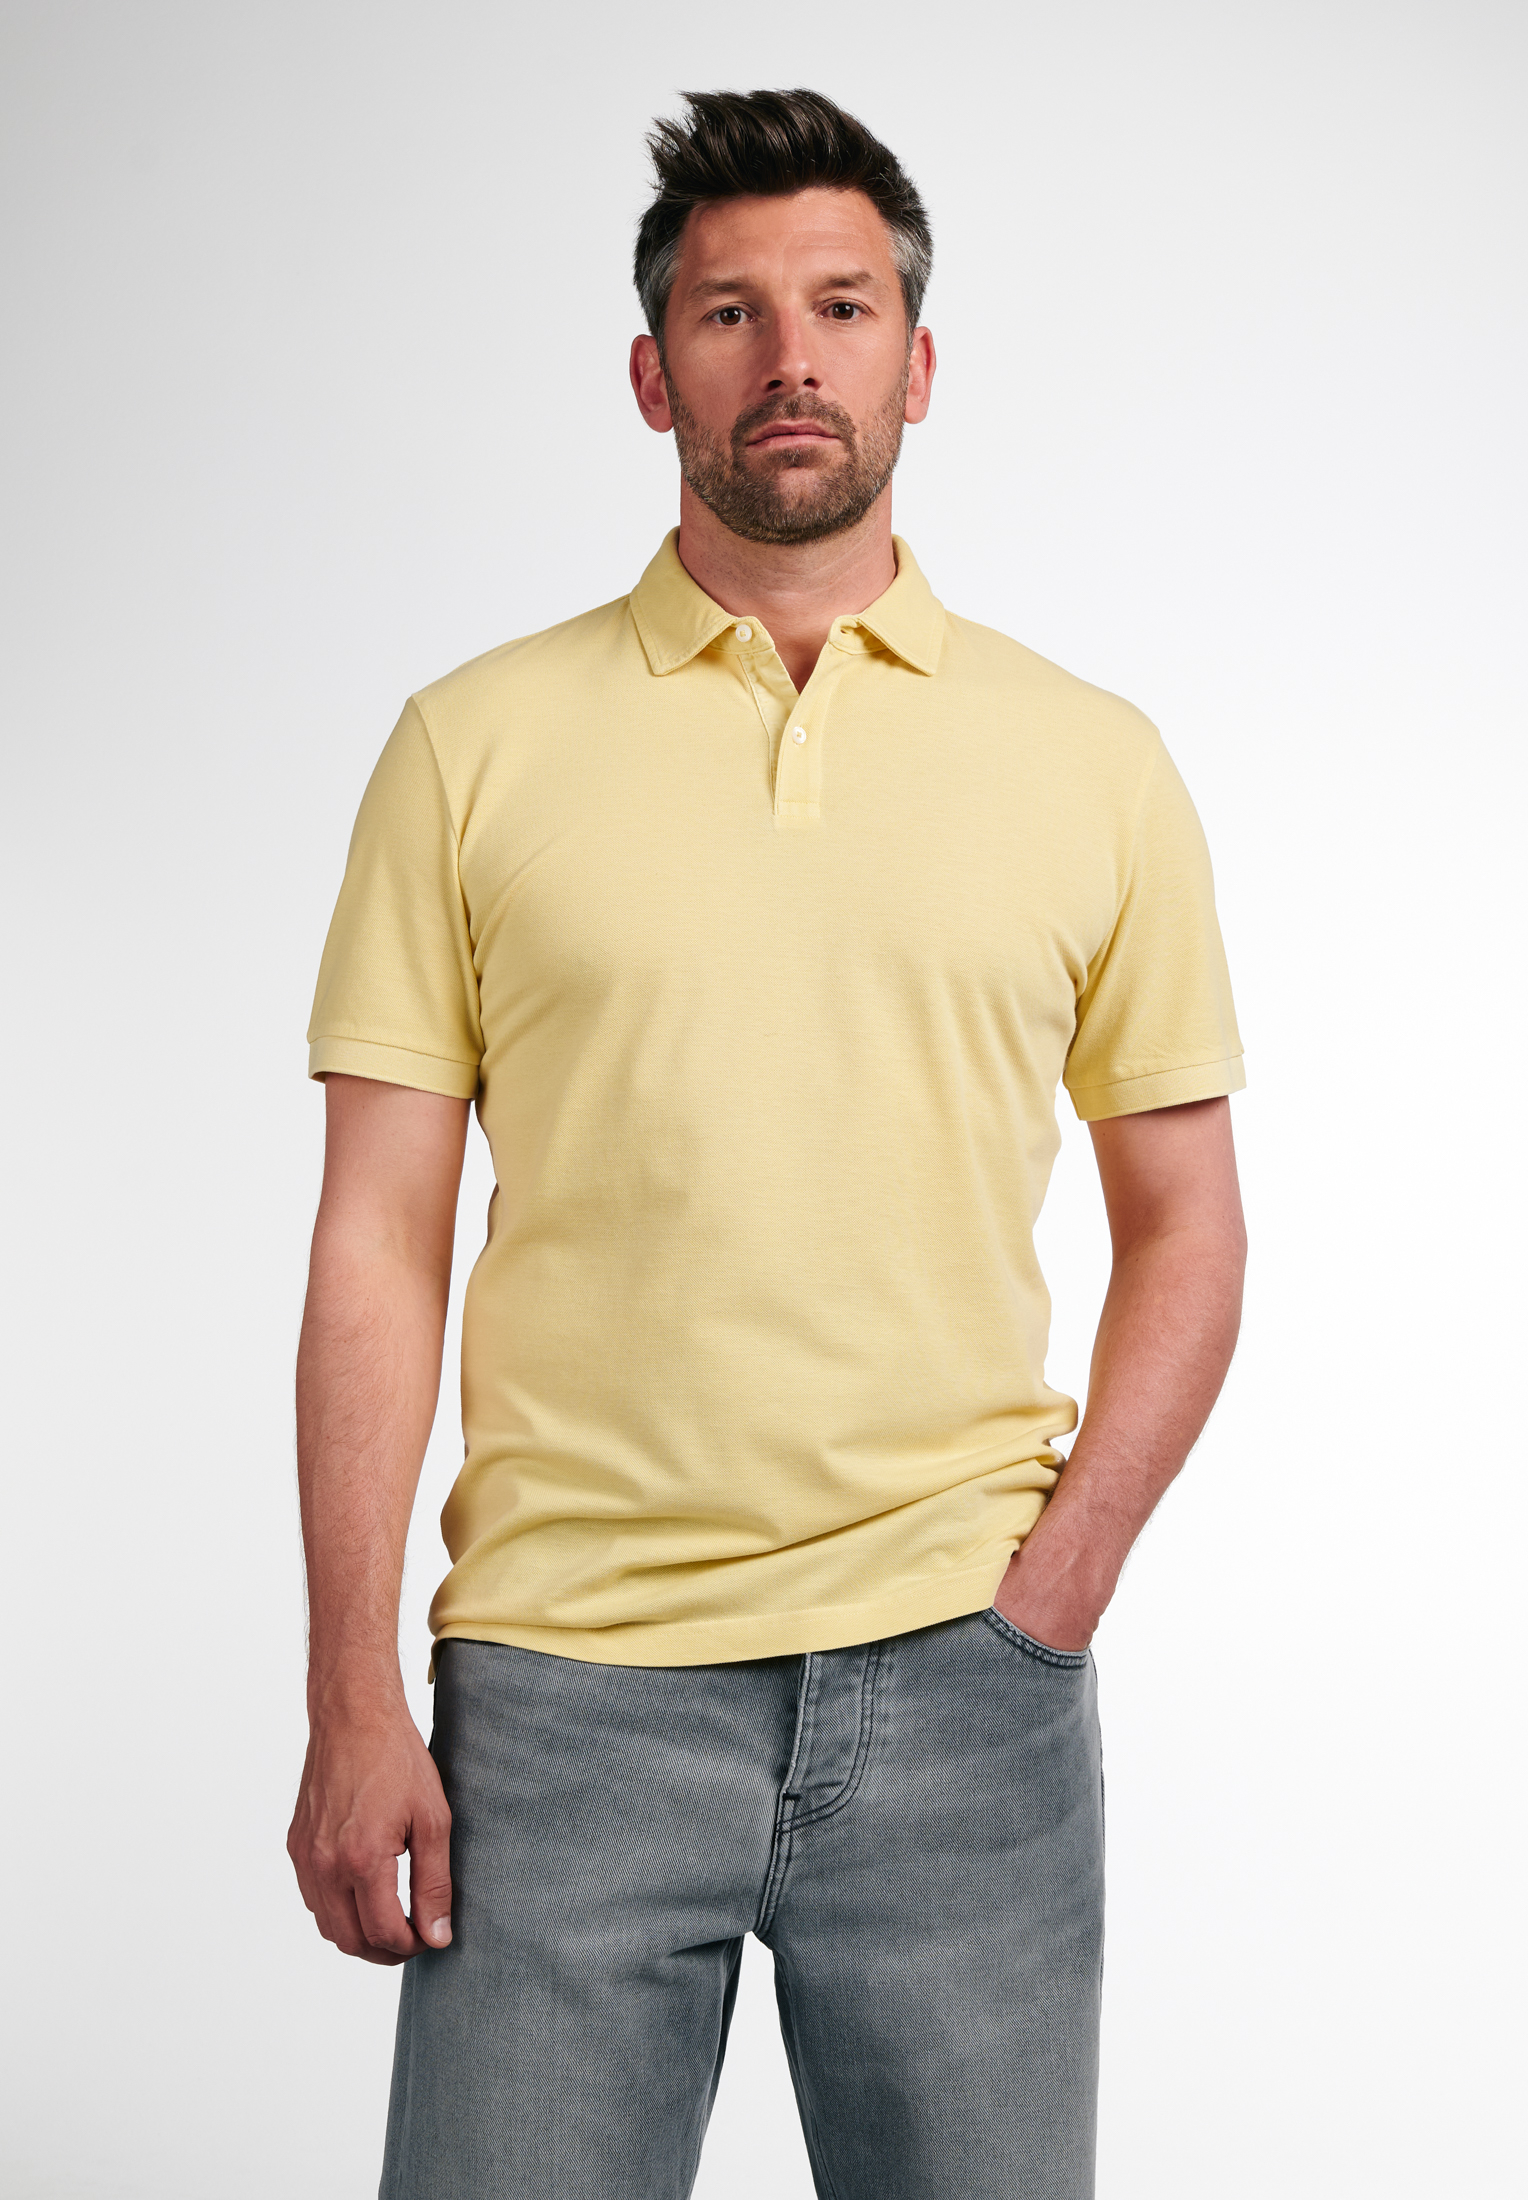 1SP00087-07-01-4XL-1/2 Poloshirt gelb | unifarben Kurzarm | in FIT | MODERN gelb 4XL |